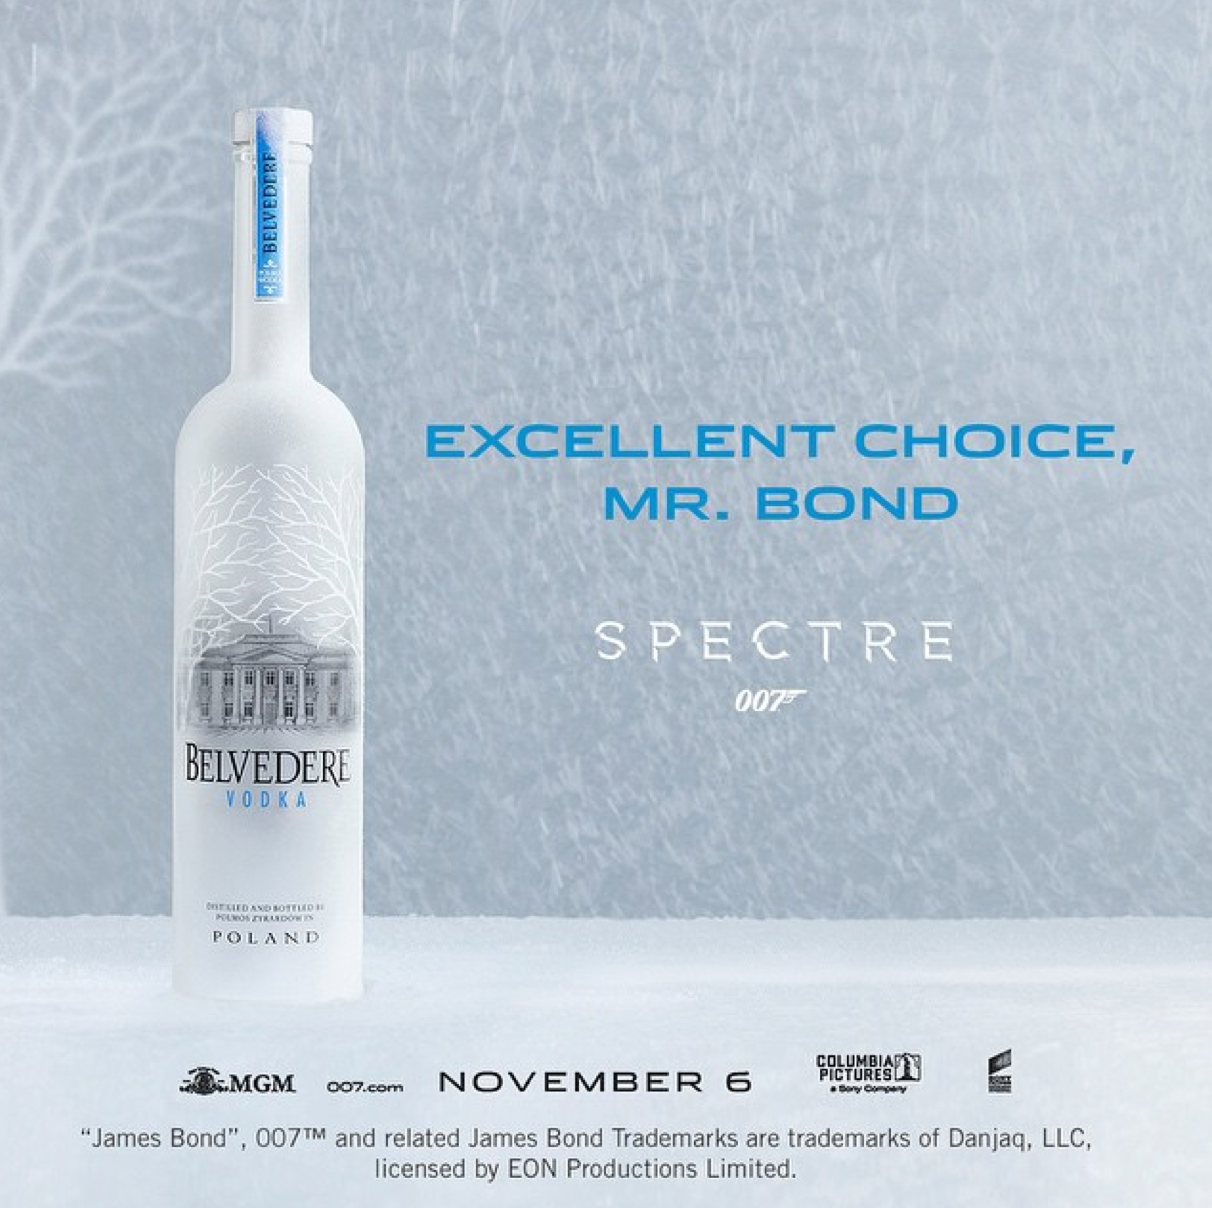 Belvedere Vodka Announces Partnership with New James Bond Movie